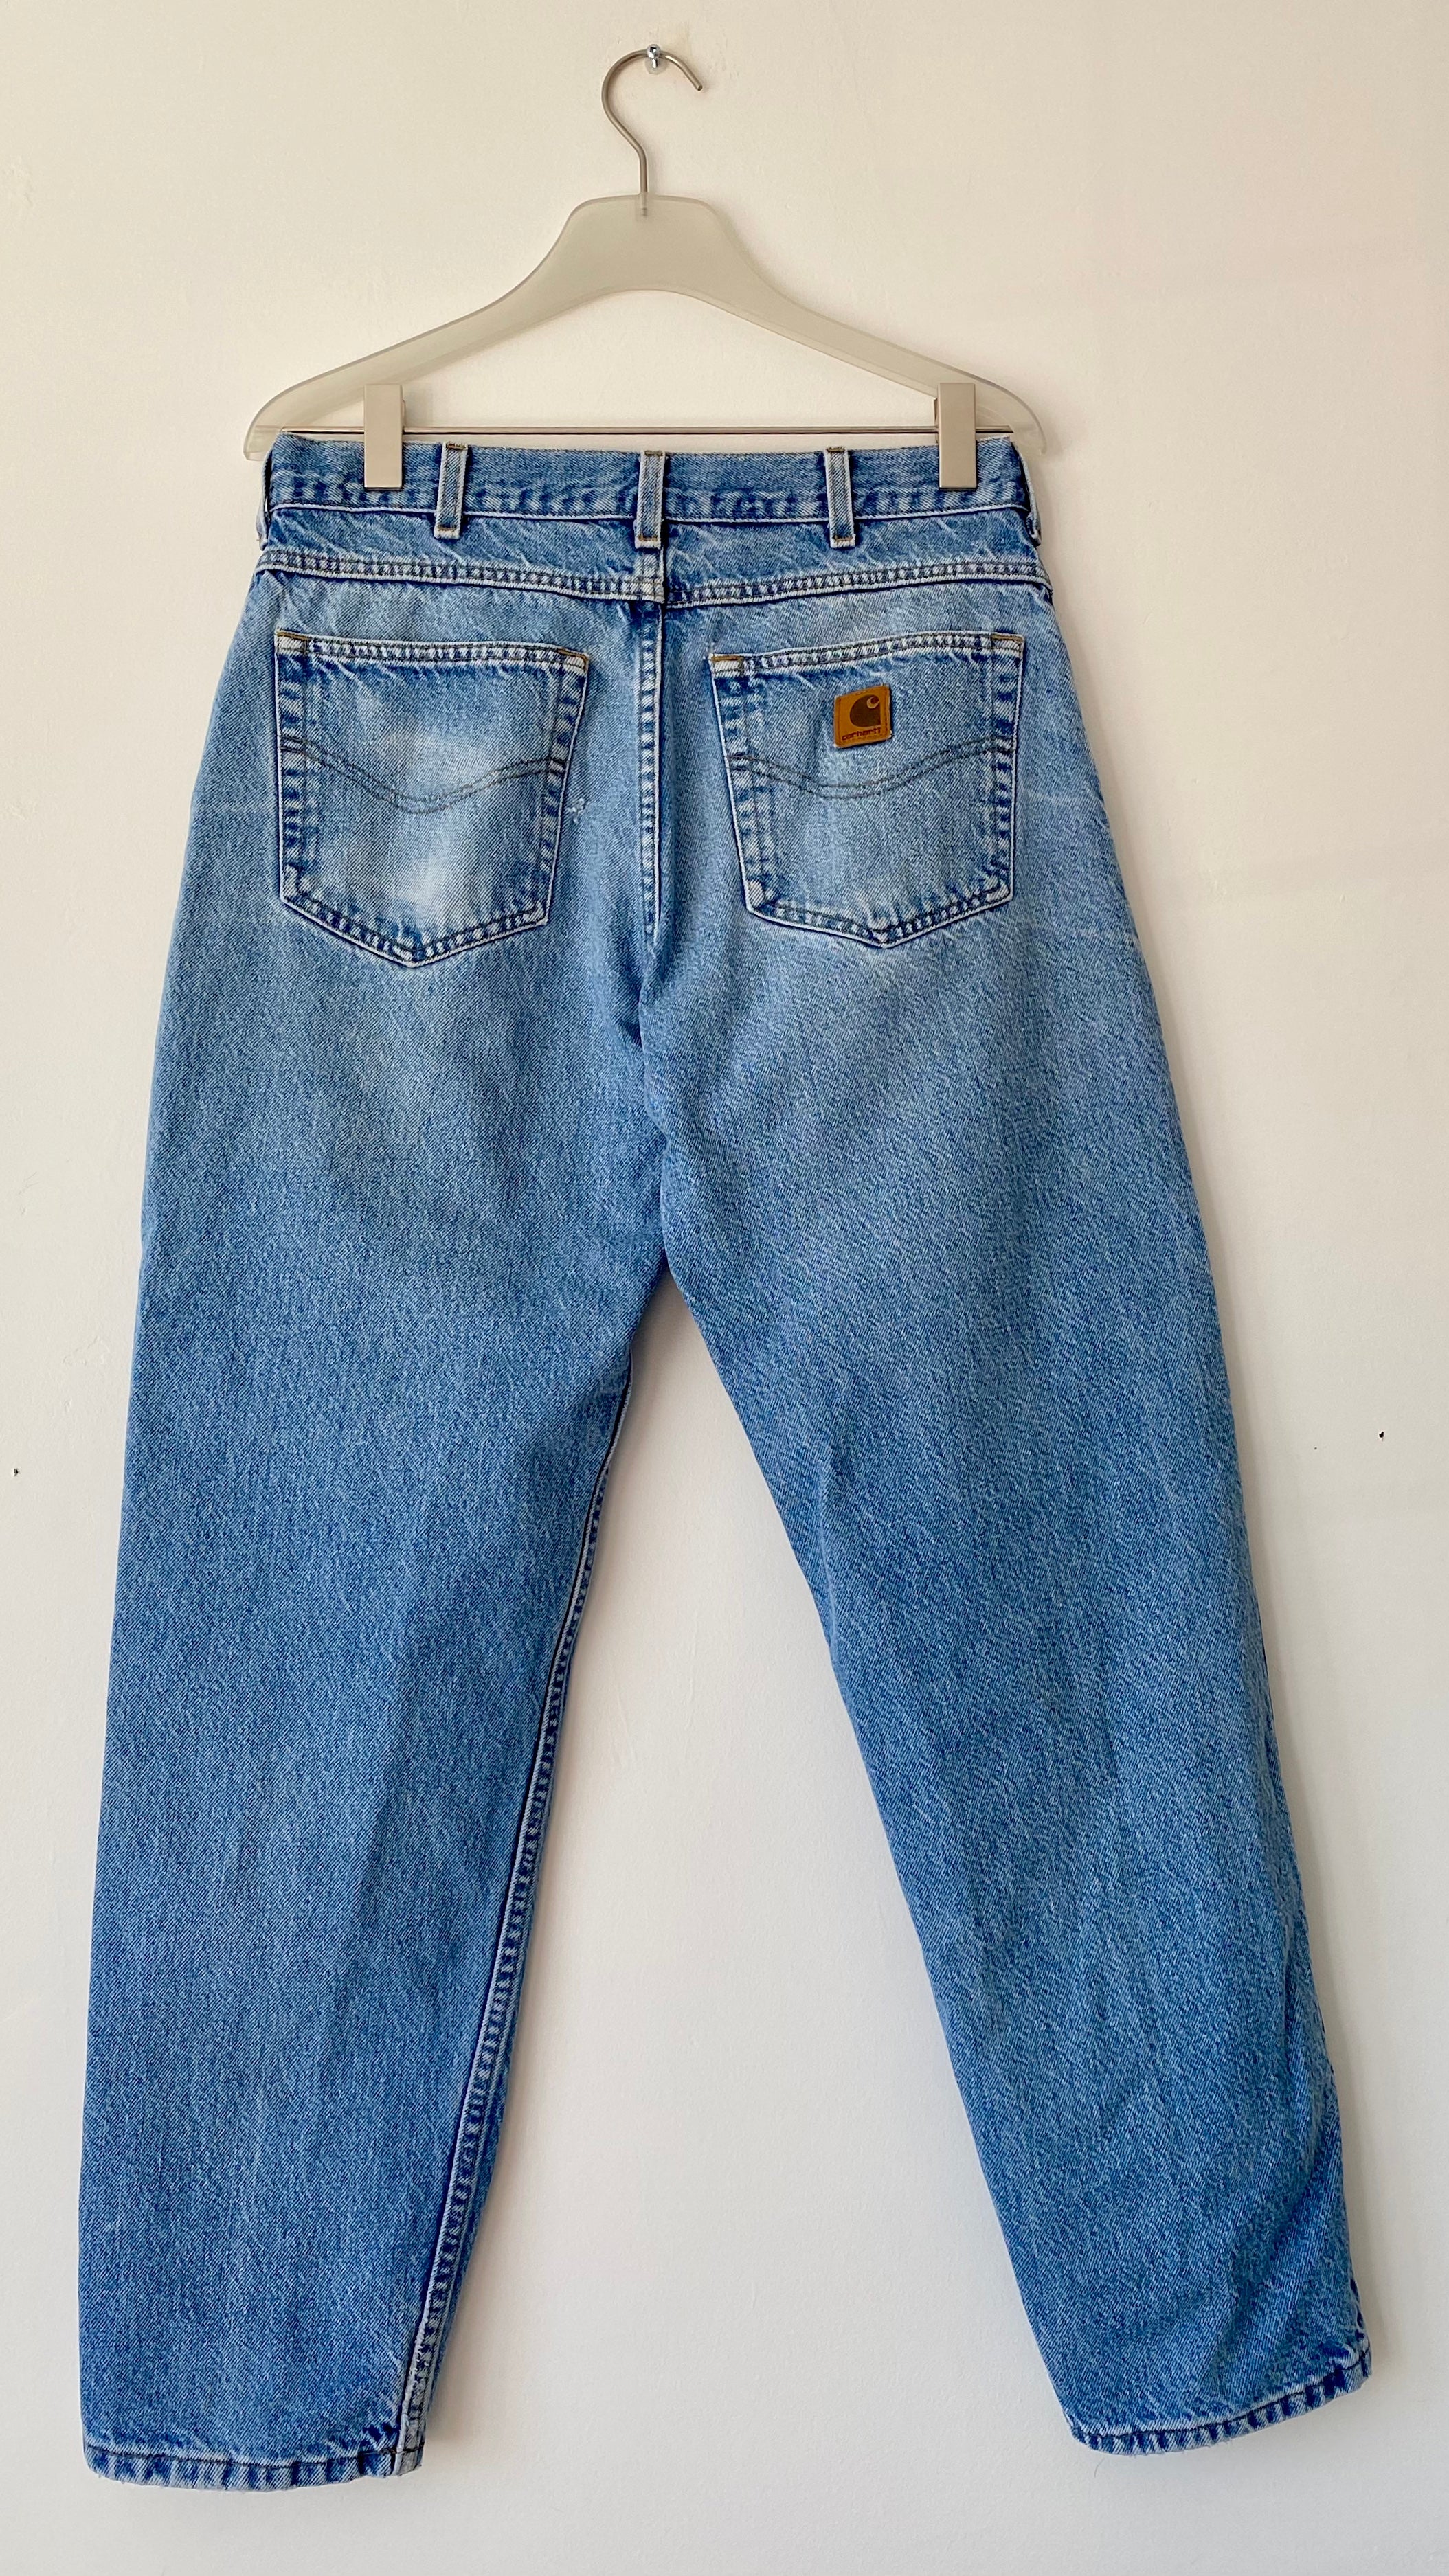 Vintage Light Wash Carhartt Jeans size 31